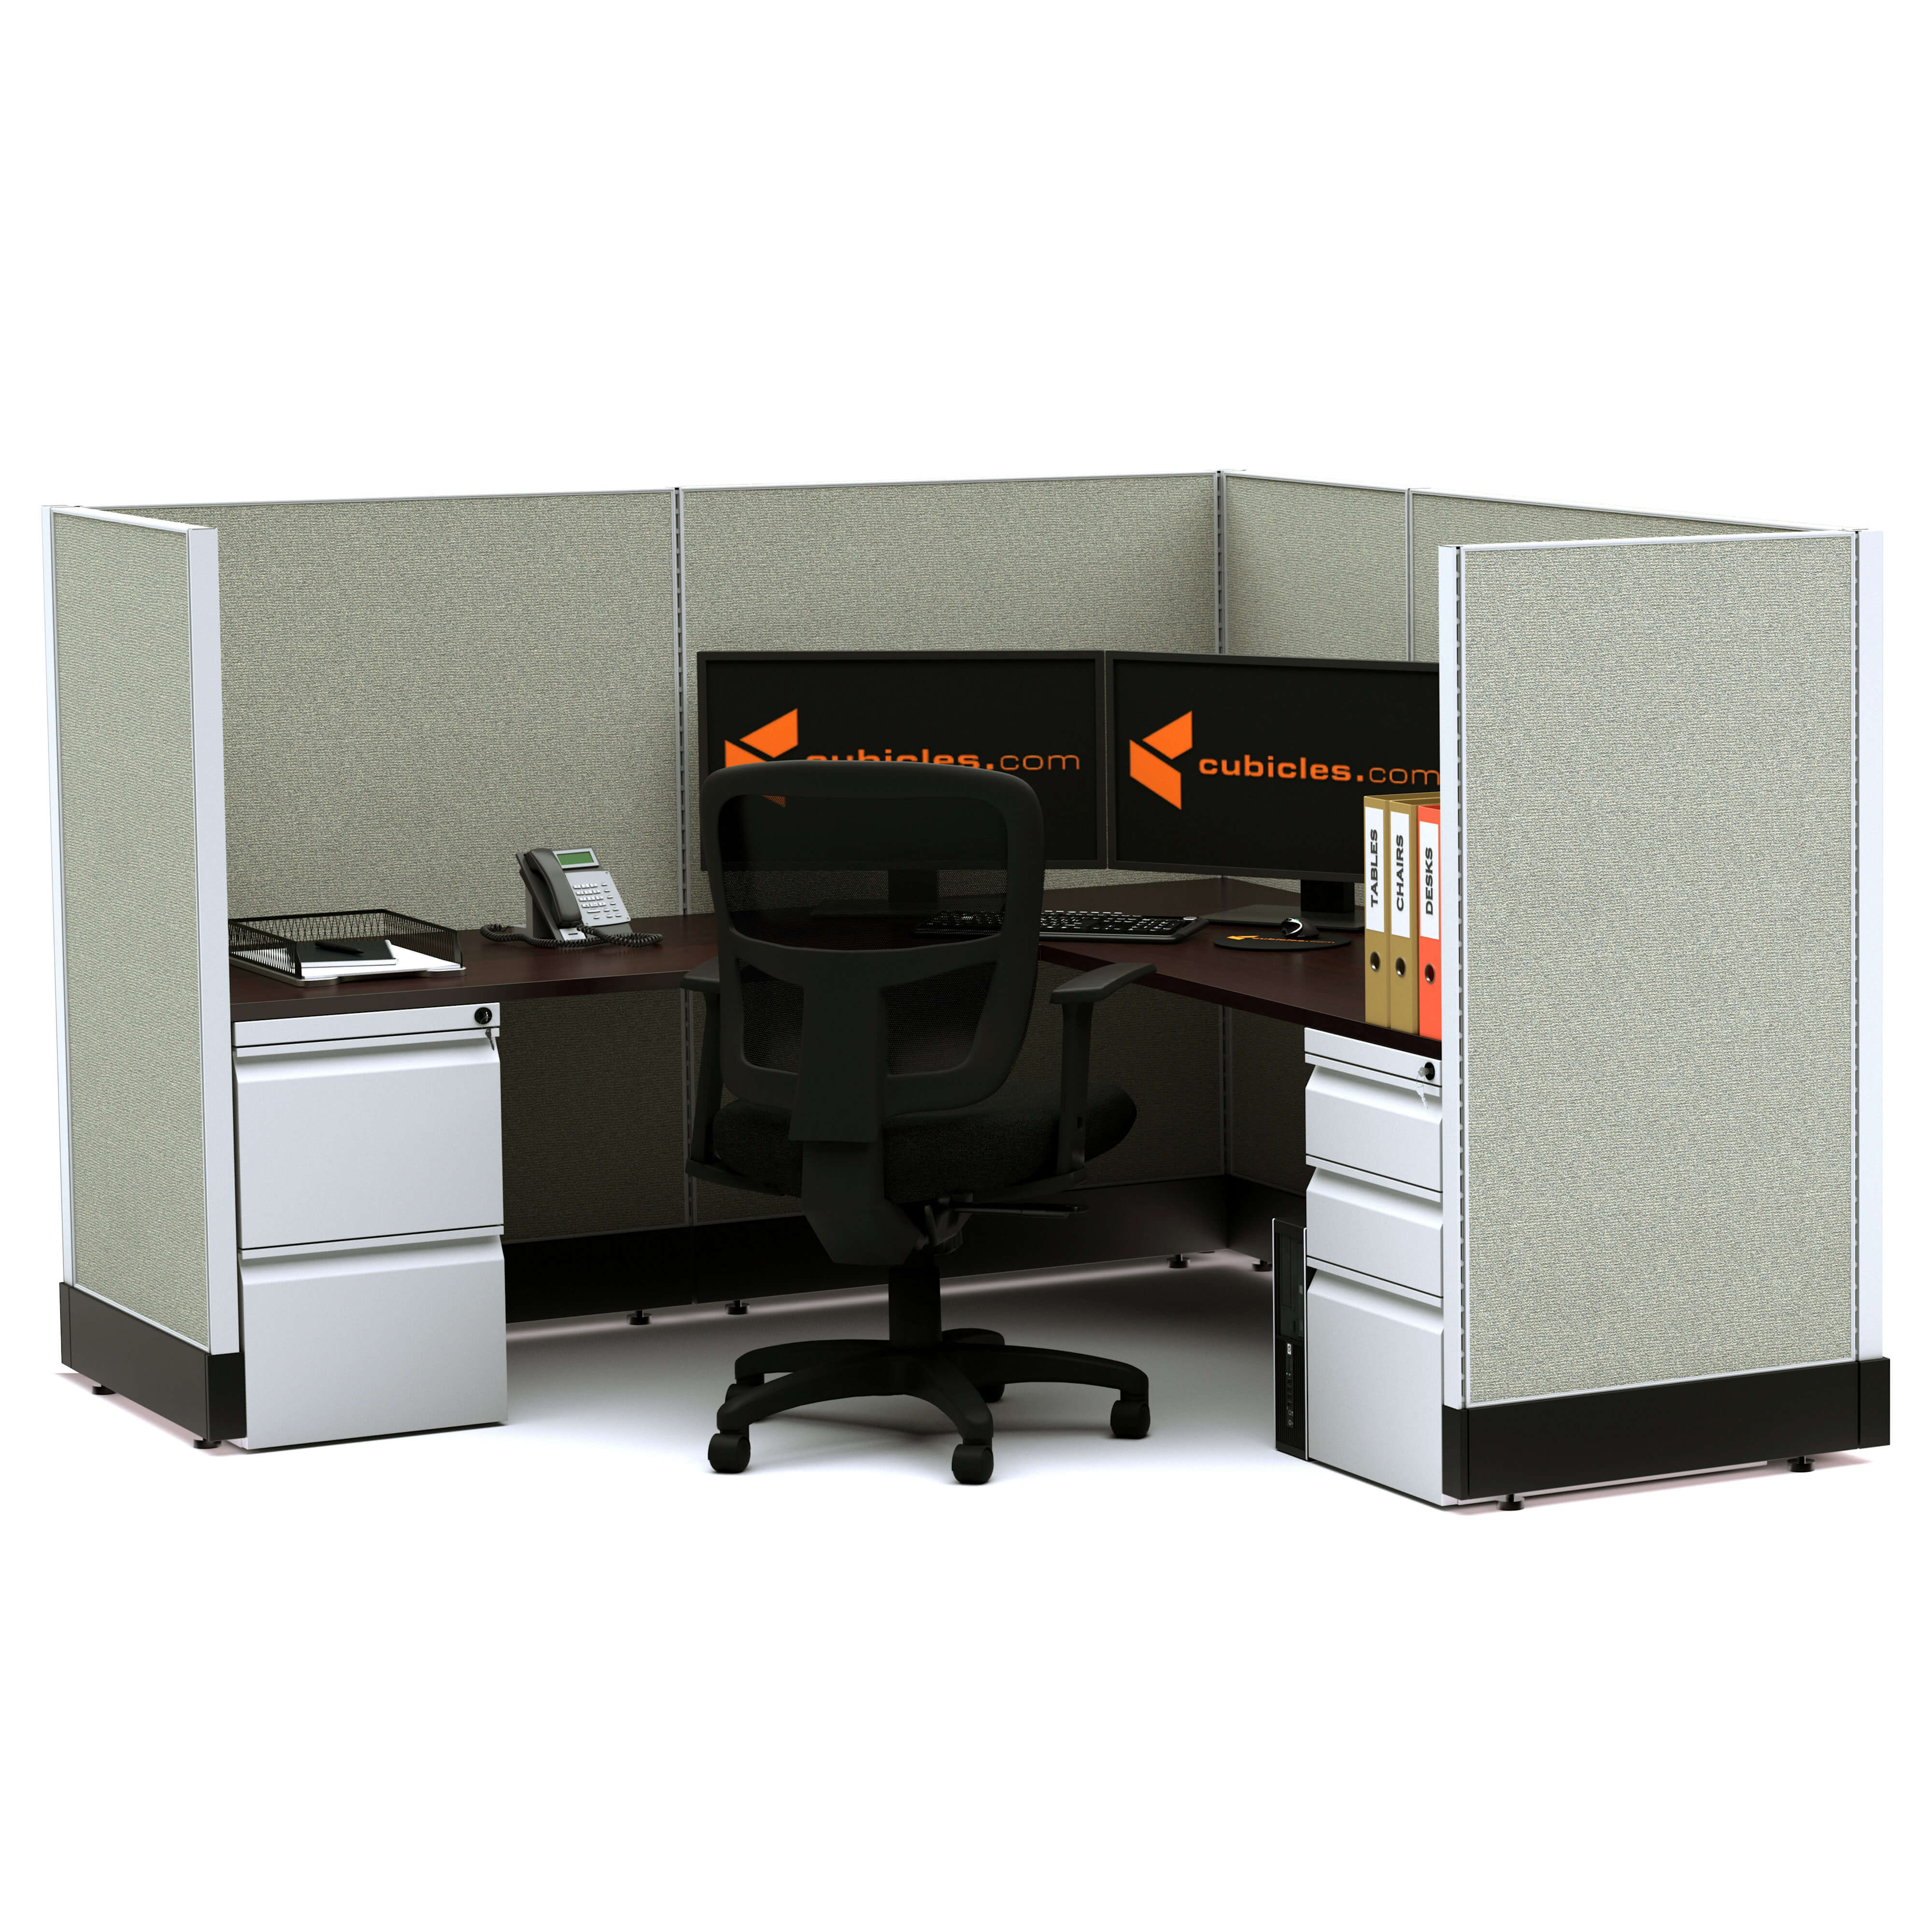 Modular office furniture workstation desk 53 unpowered